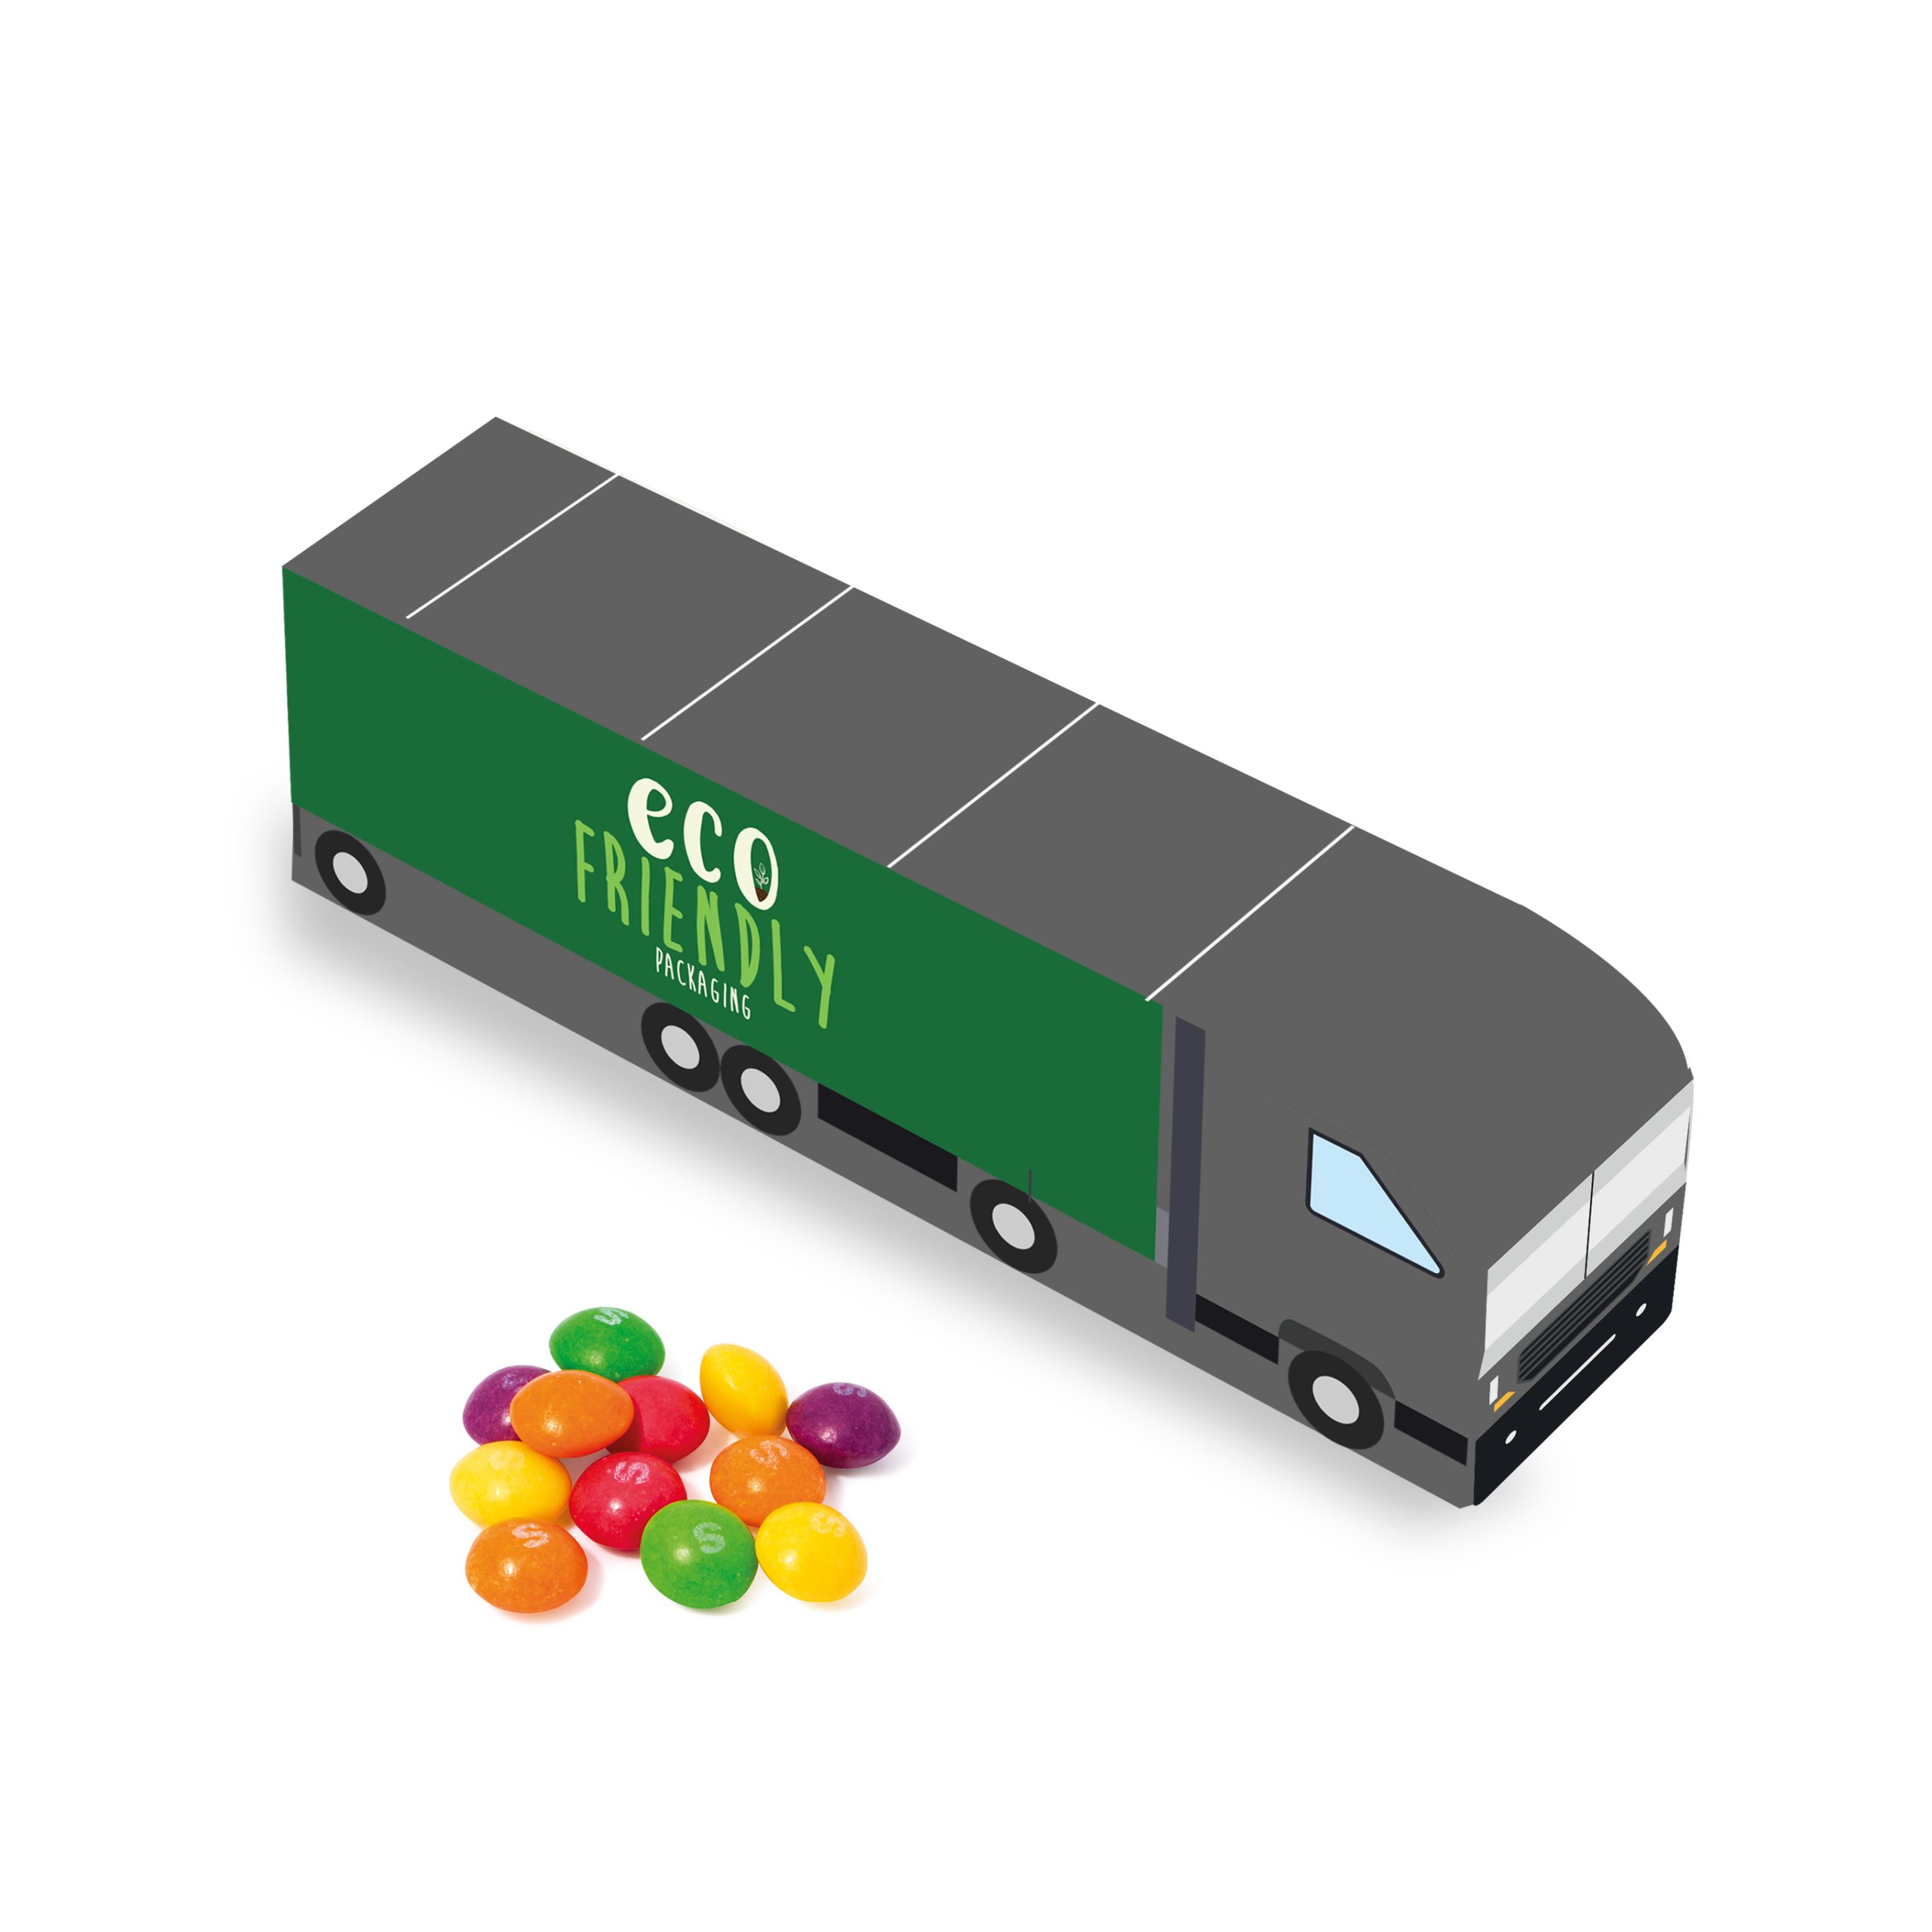 Eco Range - Eco Truck Box - Skittles®